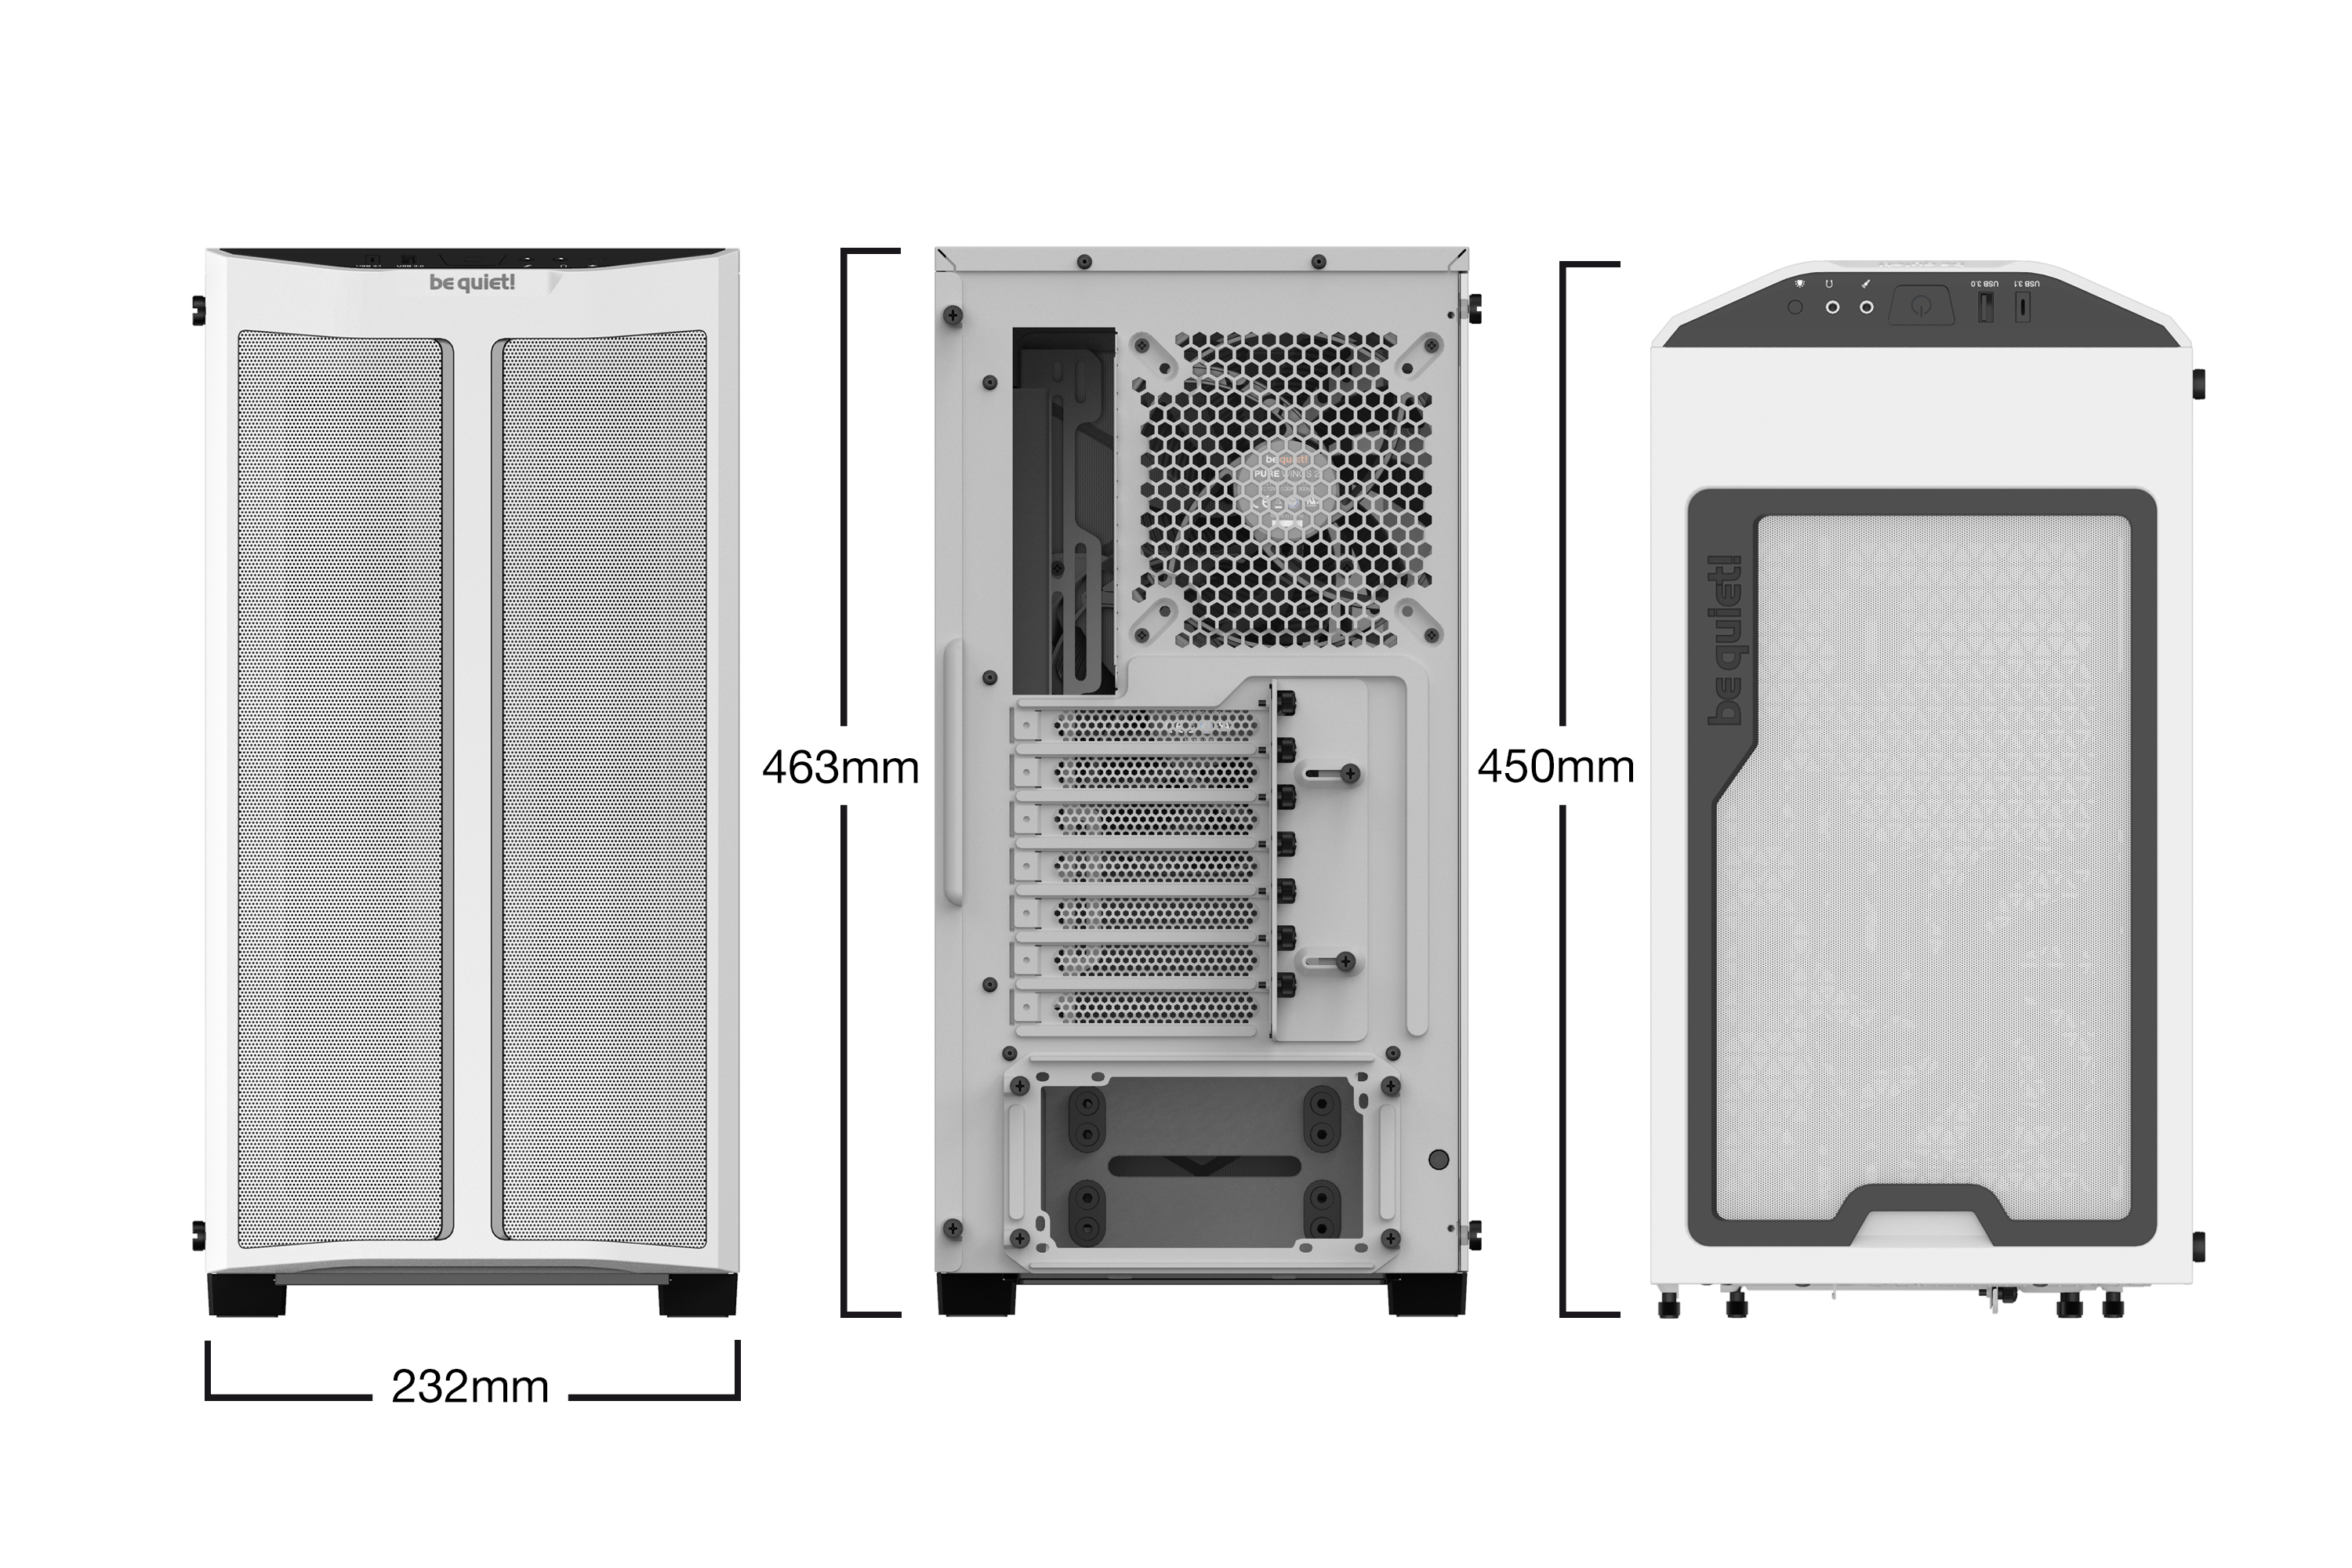 be quiet! Pure Base 500DX White, 463 x 232 x 450, IO-panel: 1x USB Type C gen 2, 1x USB 3.0, HD Audio, 5x 2,5 inch, 2x 3,5 inch, inc 3x 140 mm Pure Wings 2, max GPU 369mm, 3 pin a-RGB